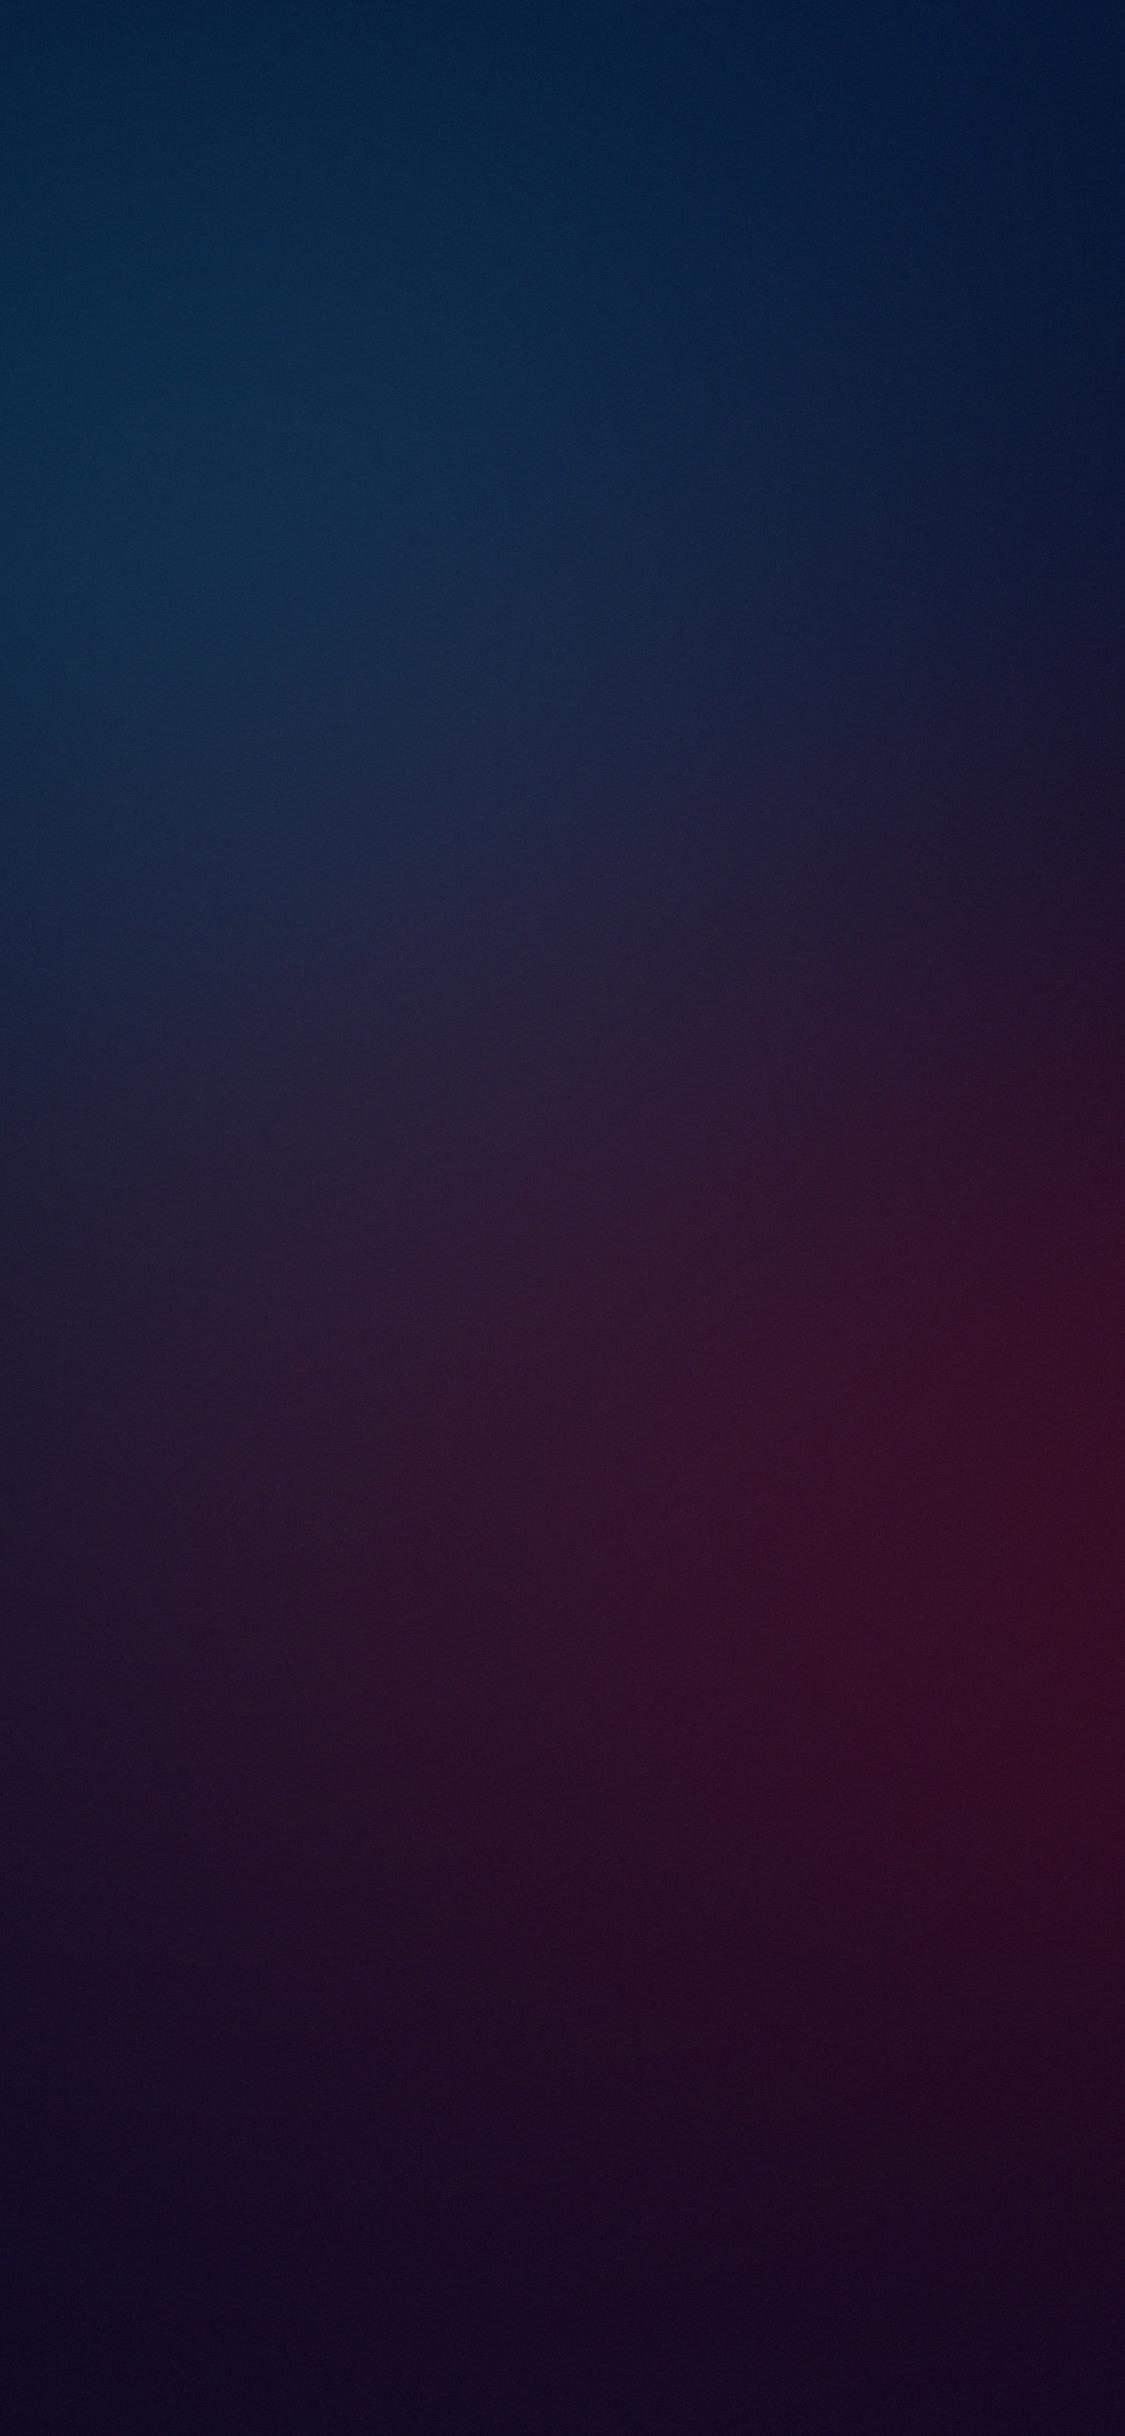 Dark Blur Abstract 4k iPhone XS, iPhone iPhone X